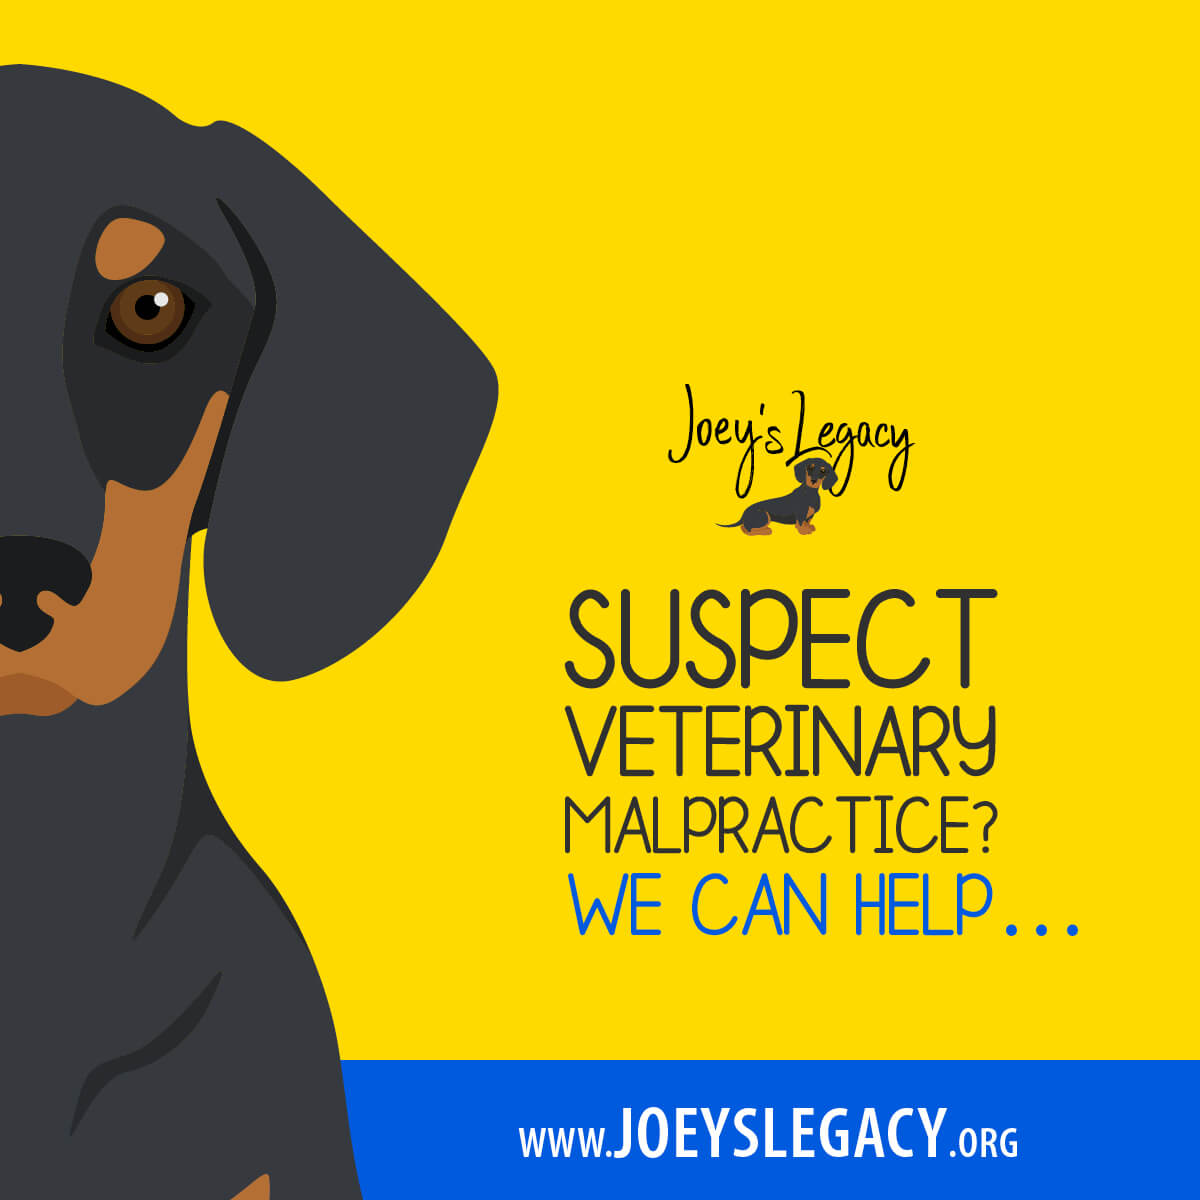 Joey's Legacy Social Media Post Suspect Veterinary Malpractice? We Can Help…